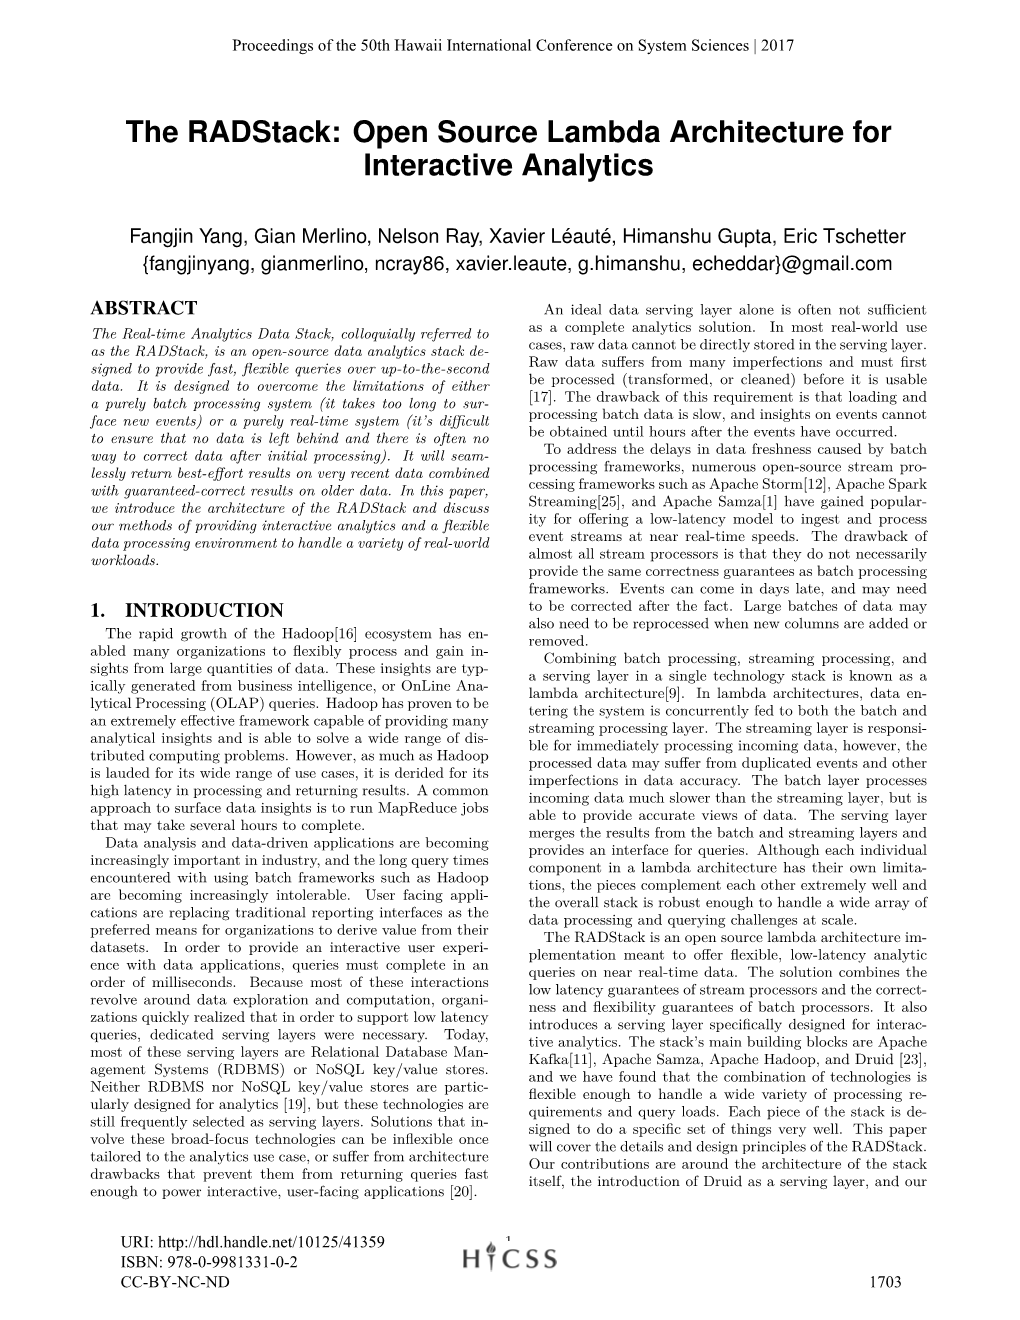 Open Source Lambda Architecture for Interactive Analytics